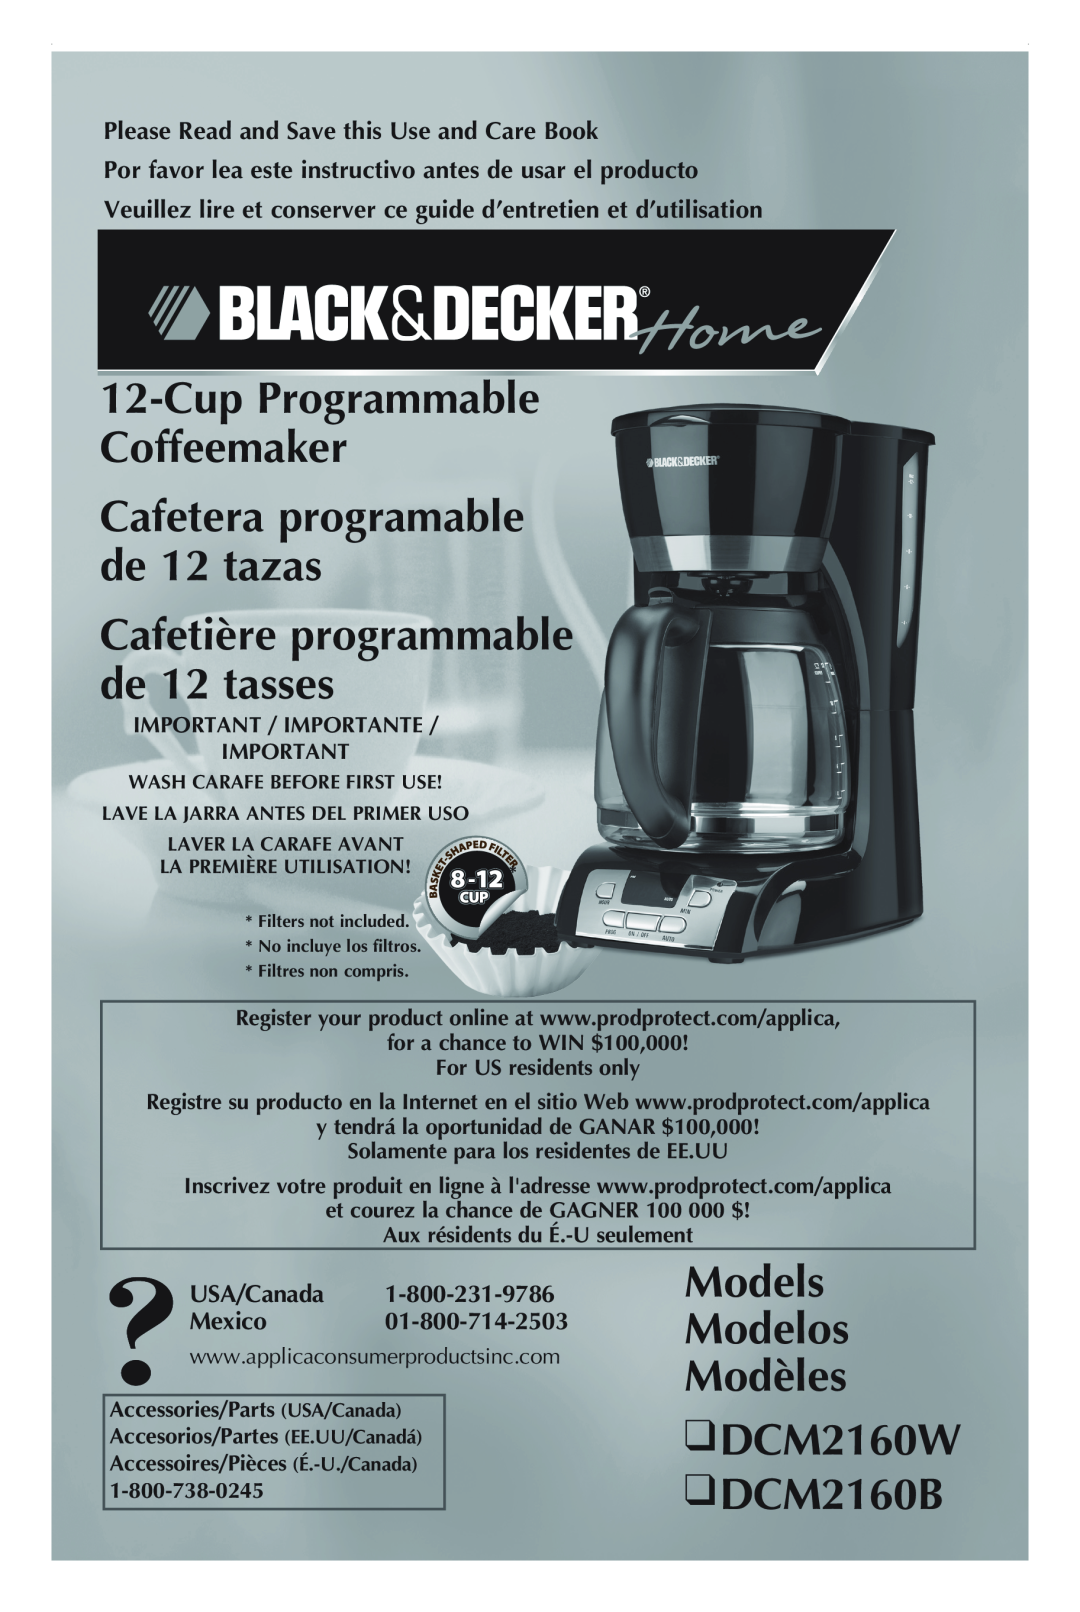 Black & Decker manual Models Modelos Modèles DCM2160W DCM2160B, CupProgrammable Coffeemaker, USA/Canada Mexico 